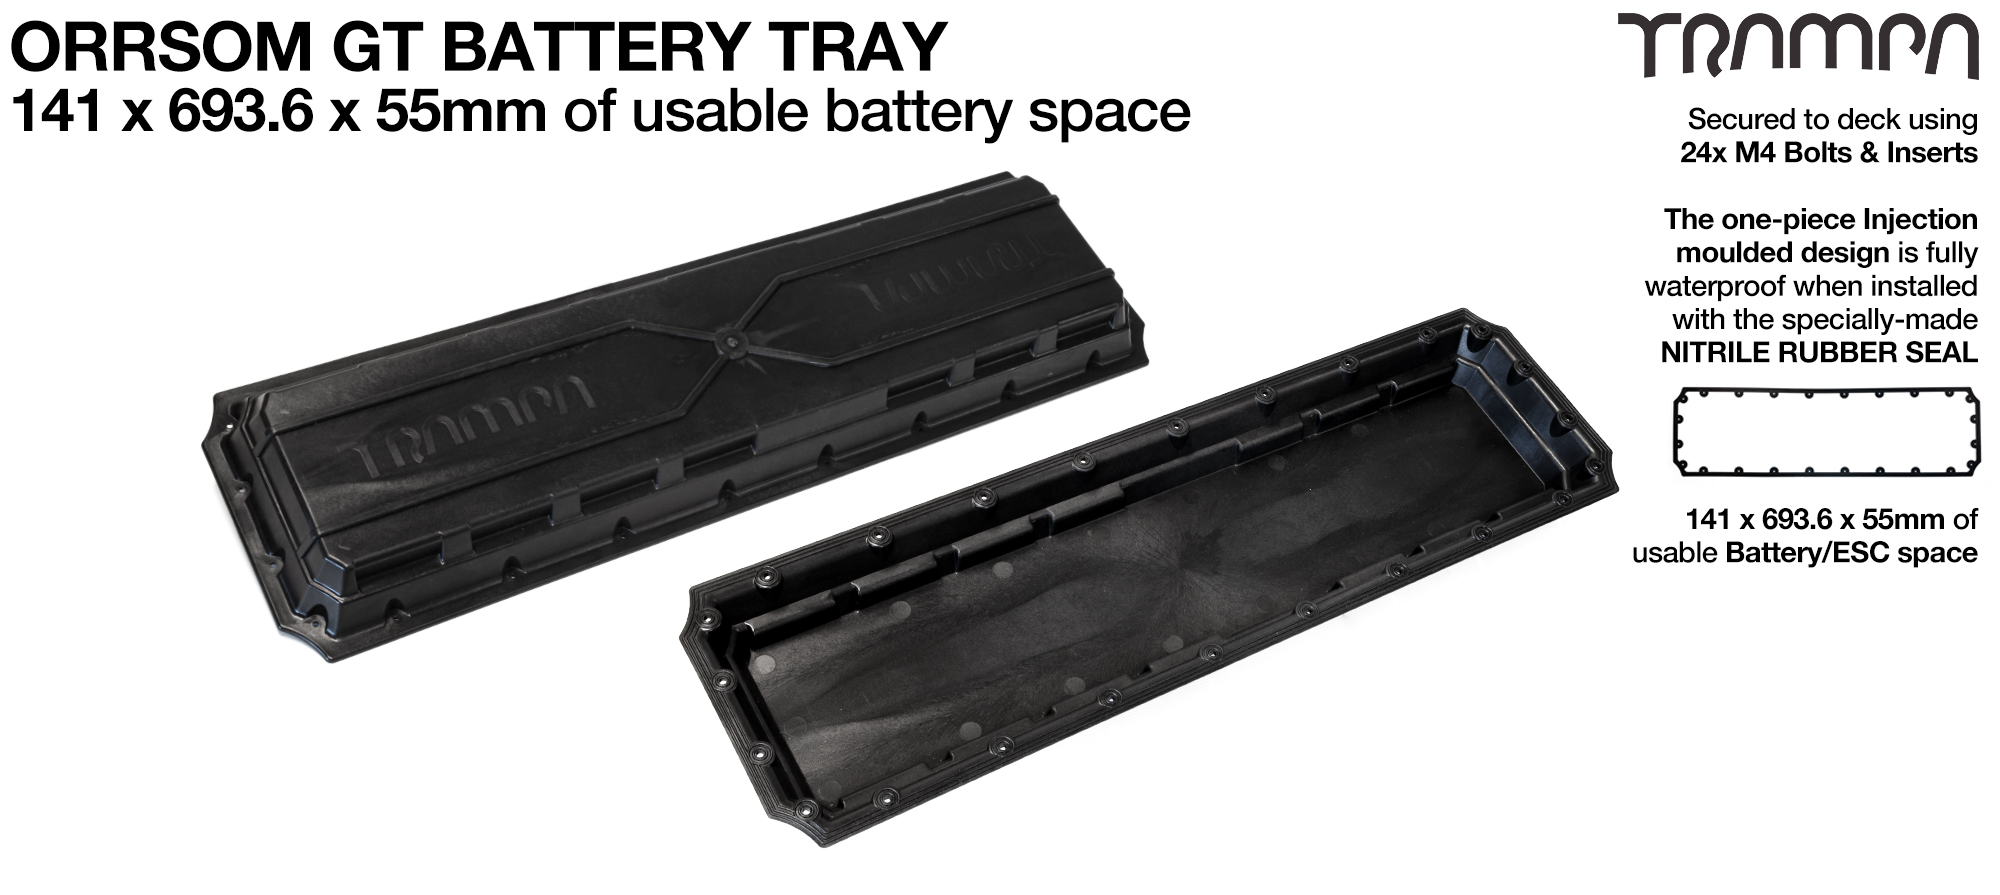 ORRSOM GT Longboard Underboard Battery Tray - Capable of housing 12s6p